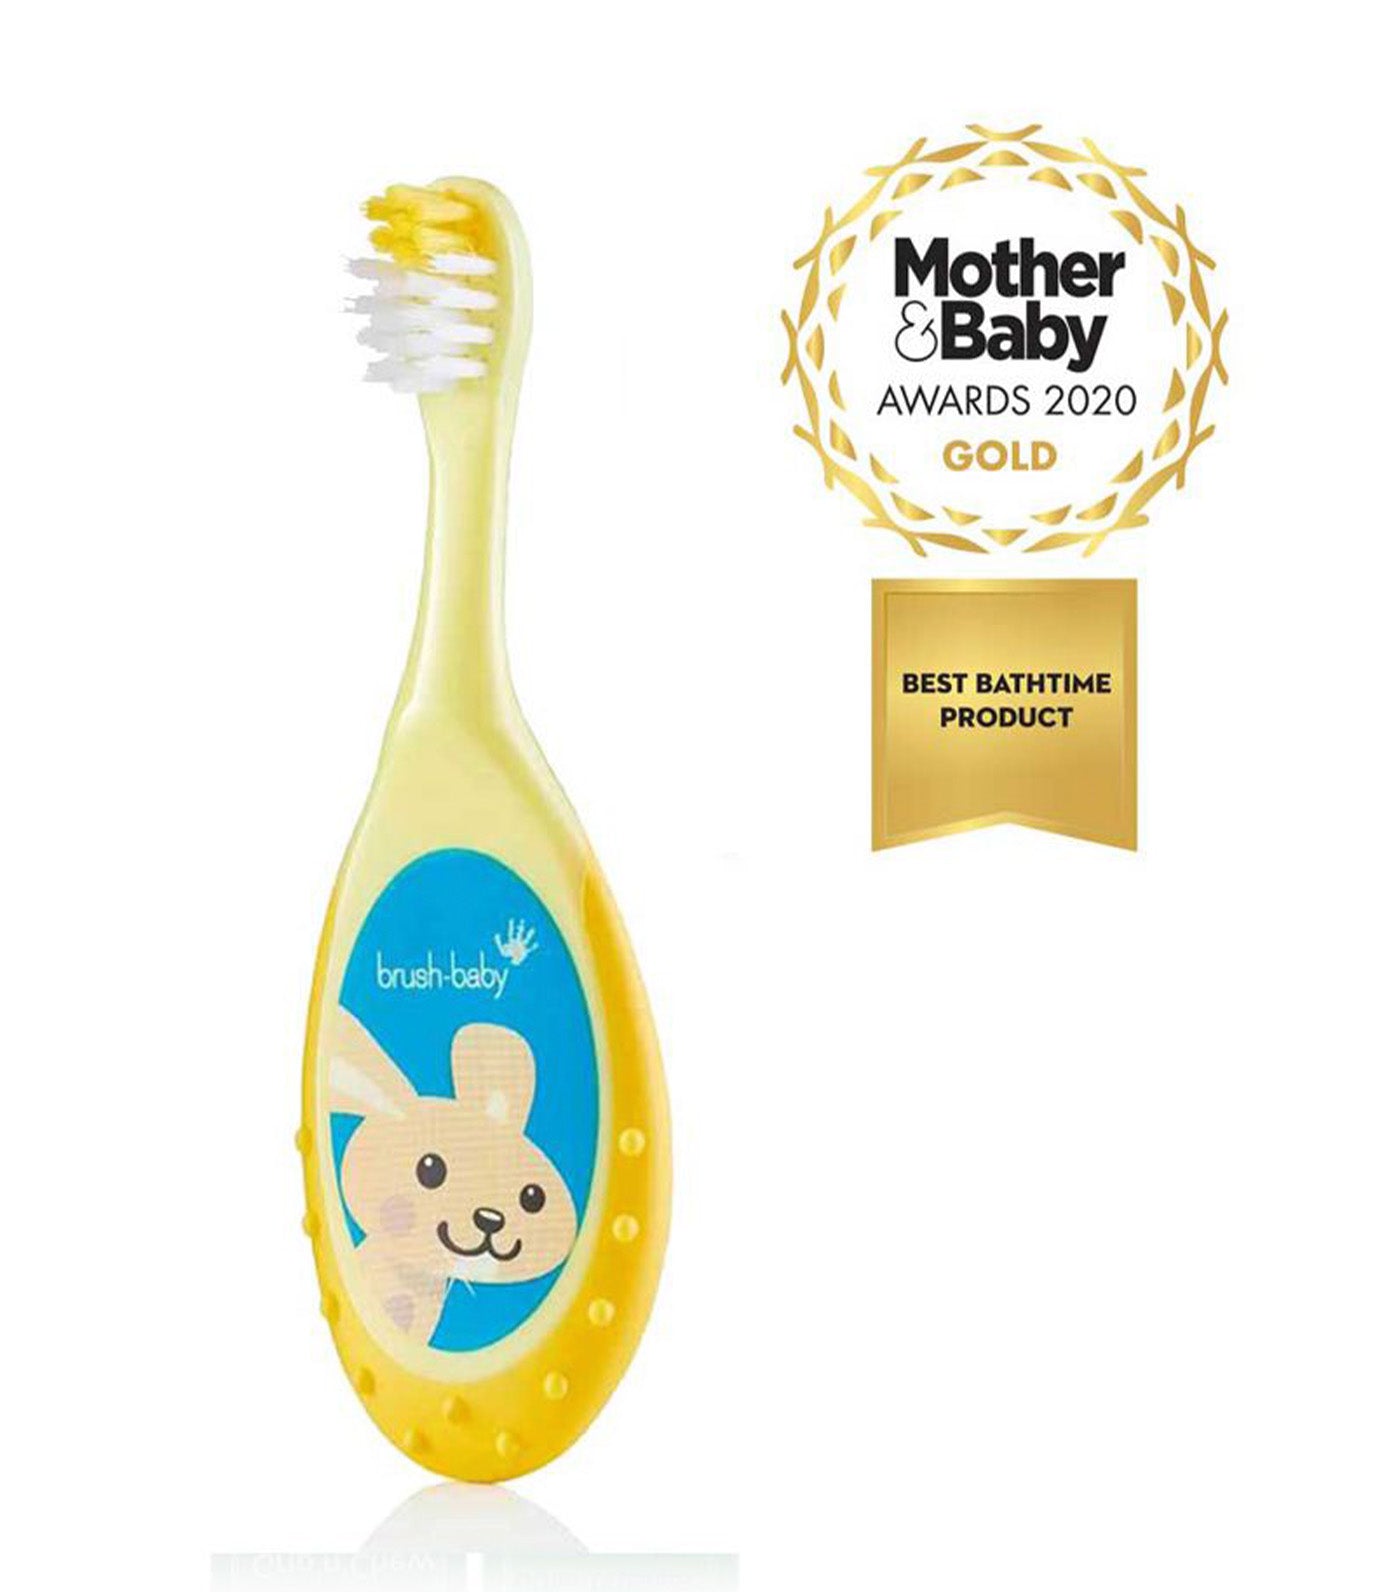 FlossBrush Baby Bristles Toothbrush (0-3Y)